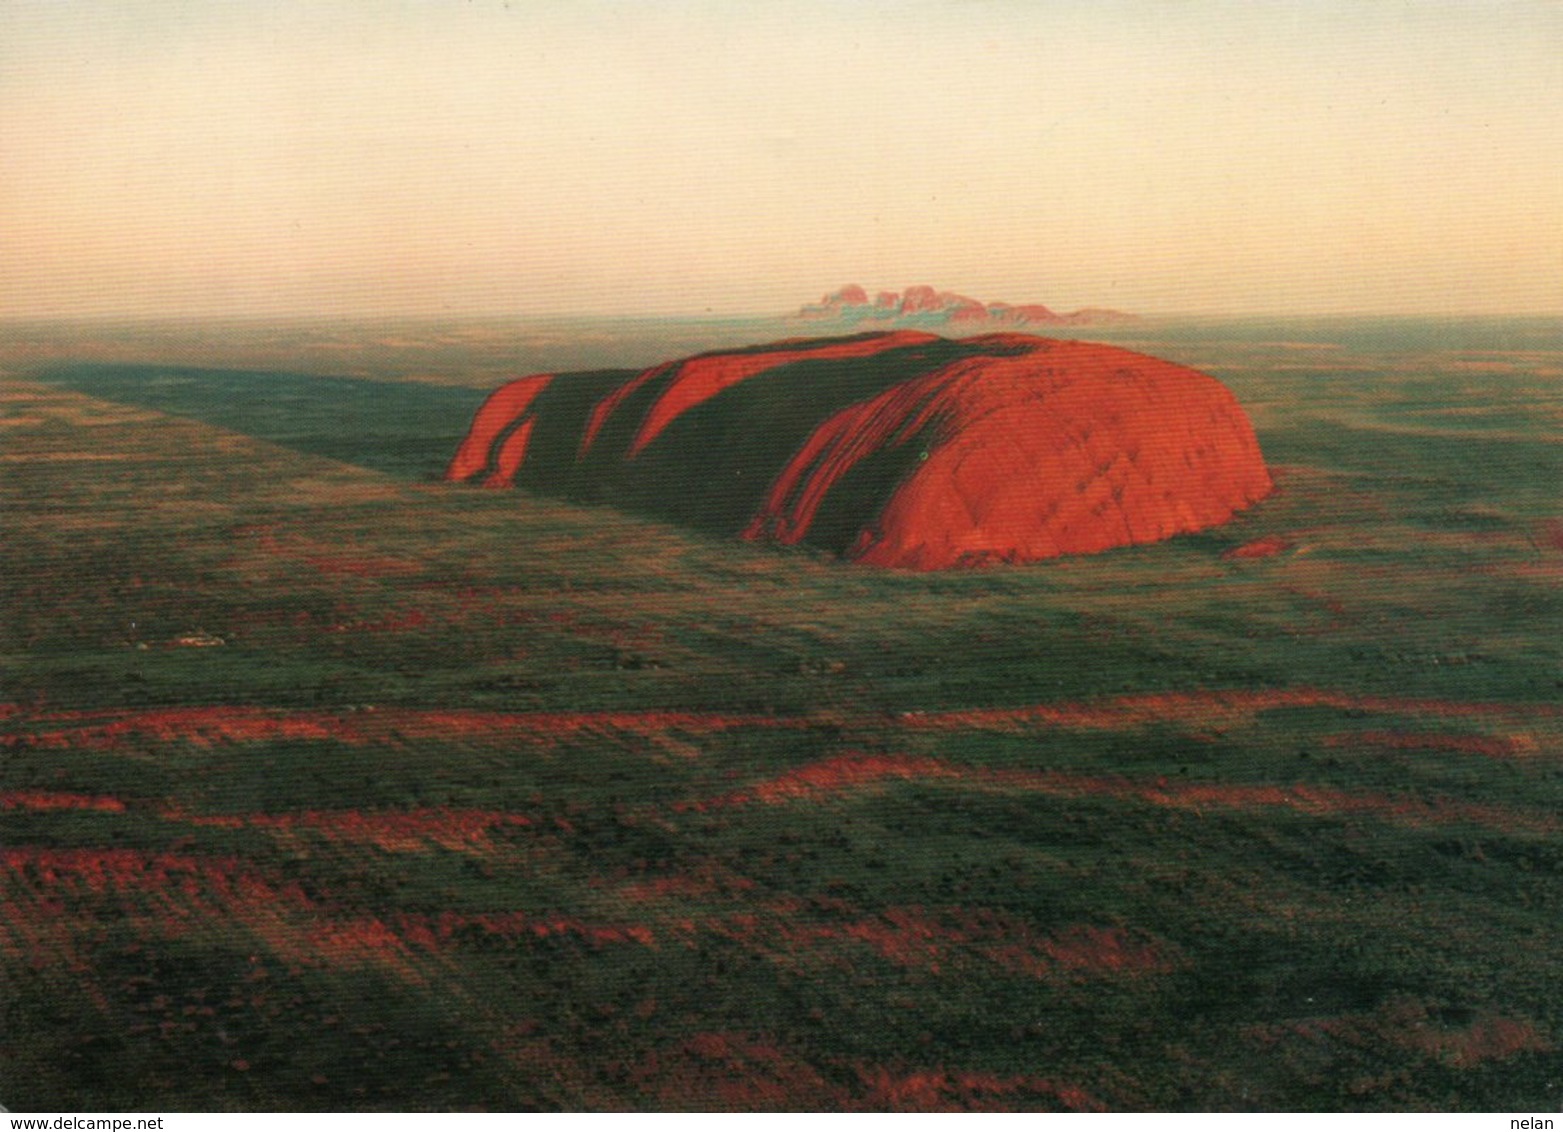 AYERS ROCK THE OLGAS AT SUNRISE-CENTRAL AUSTRALIA- VIAGGIATA 1981   FG - Uluru & The Olgas